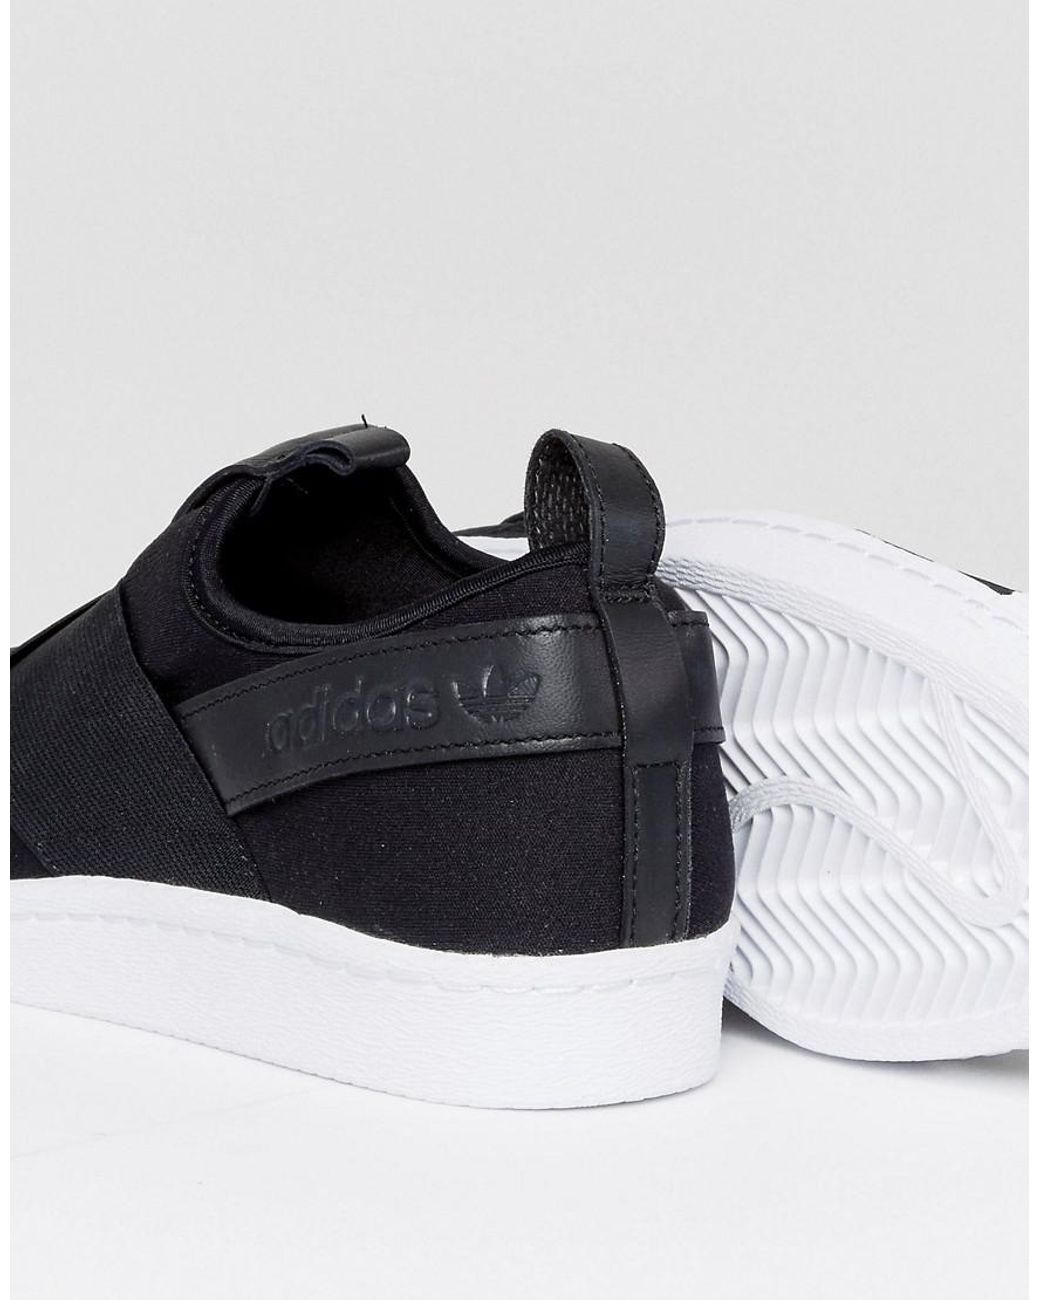 adidas Originals Superstar Slip-on Trainers in Black for Men Lyst